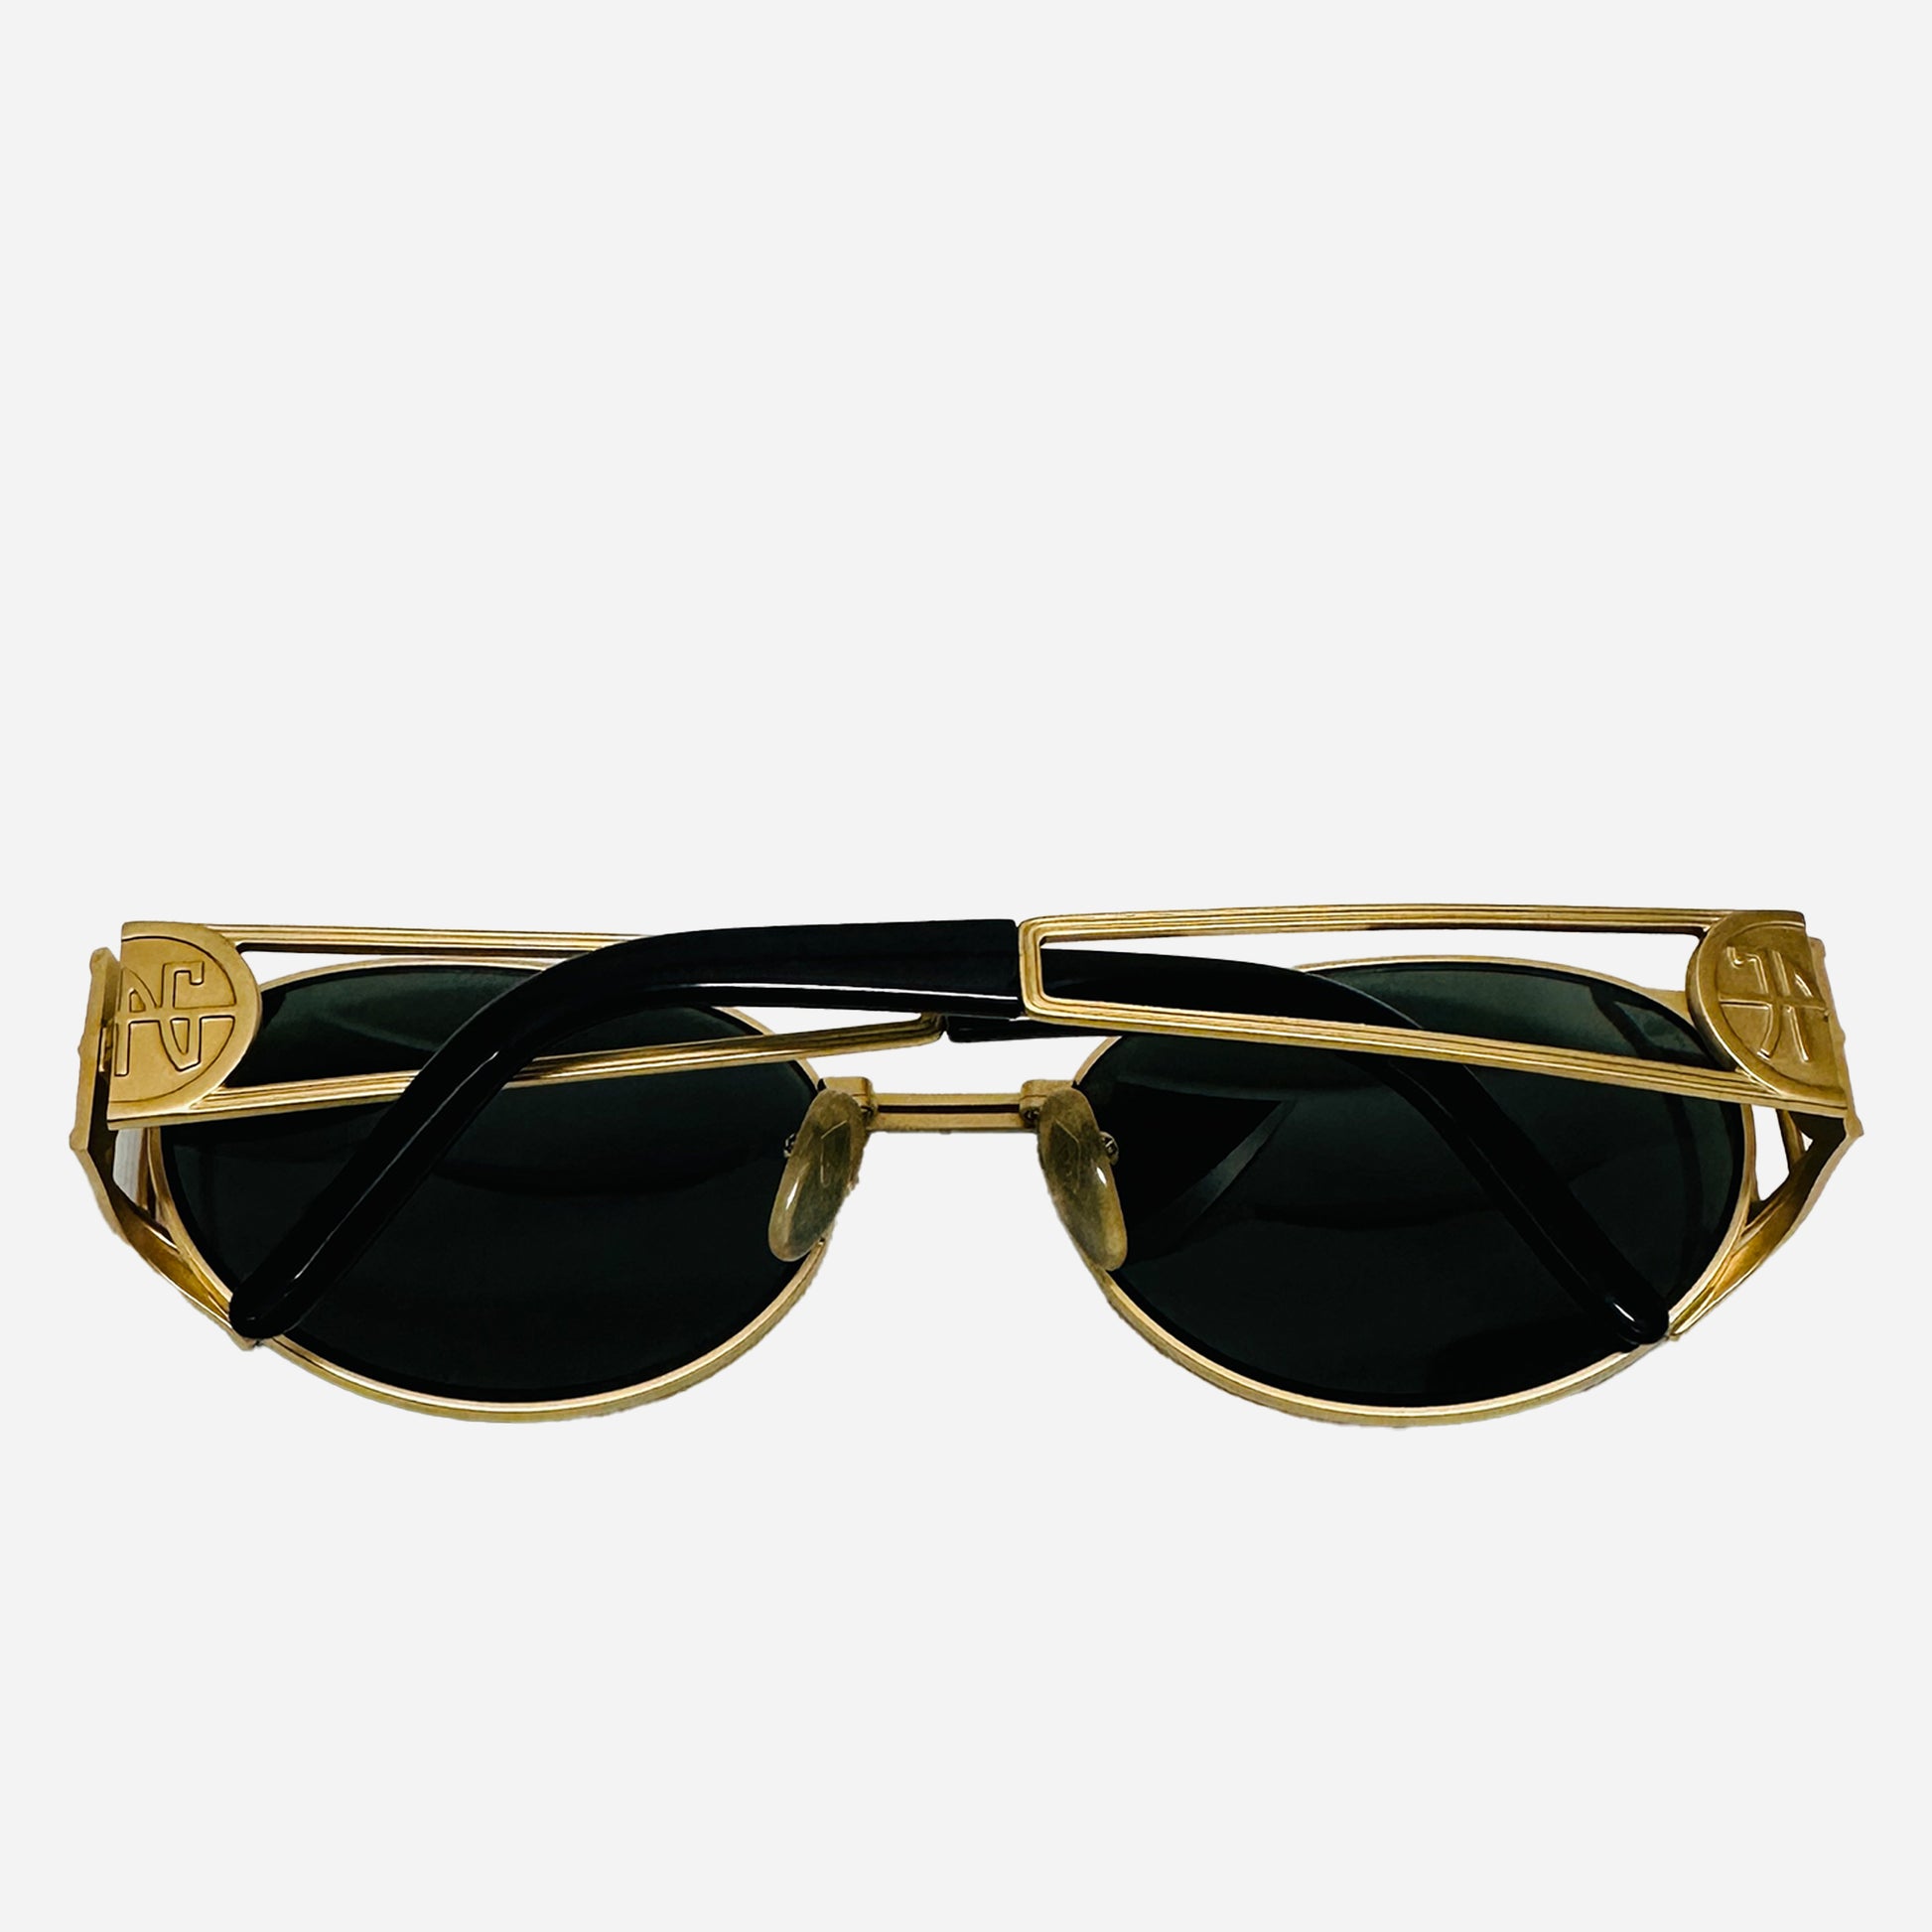 Vintage-Jean-Paul-Gaultier-Sonnenbrille-Sunglasses-Model58-6102-made-in-japan-the-seekers-sunglasses-back